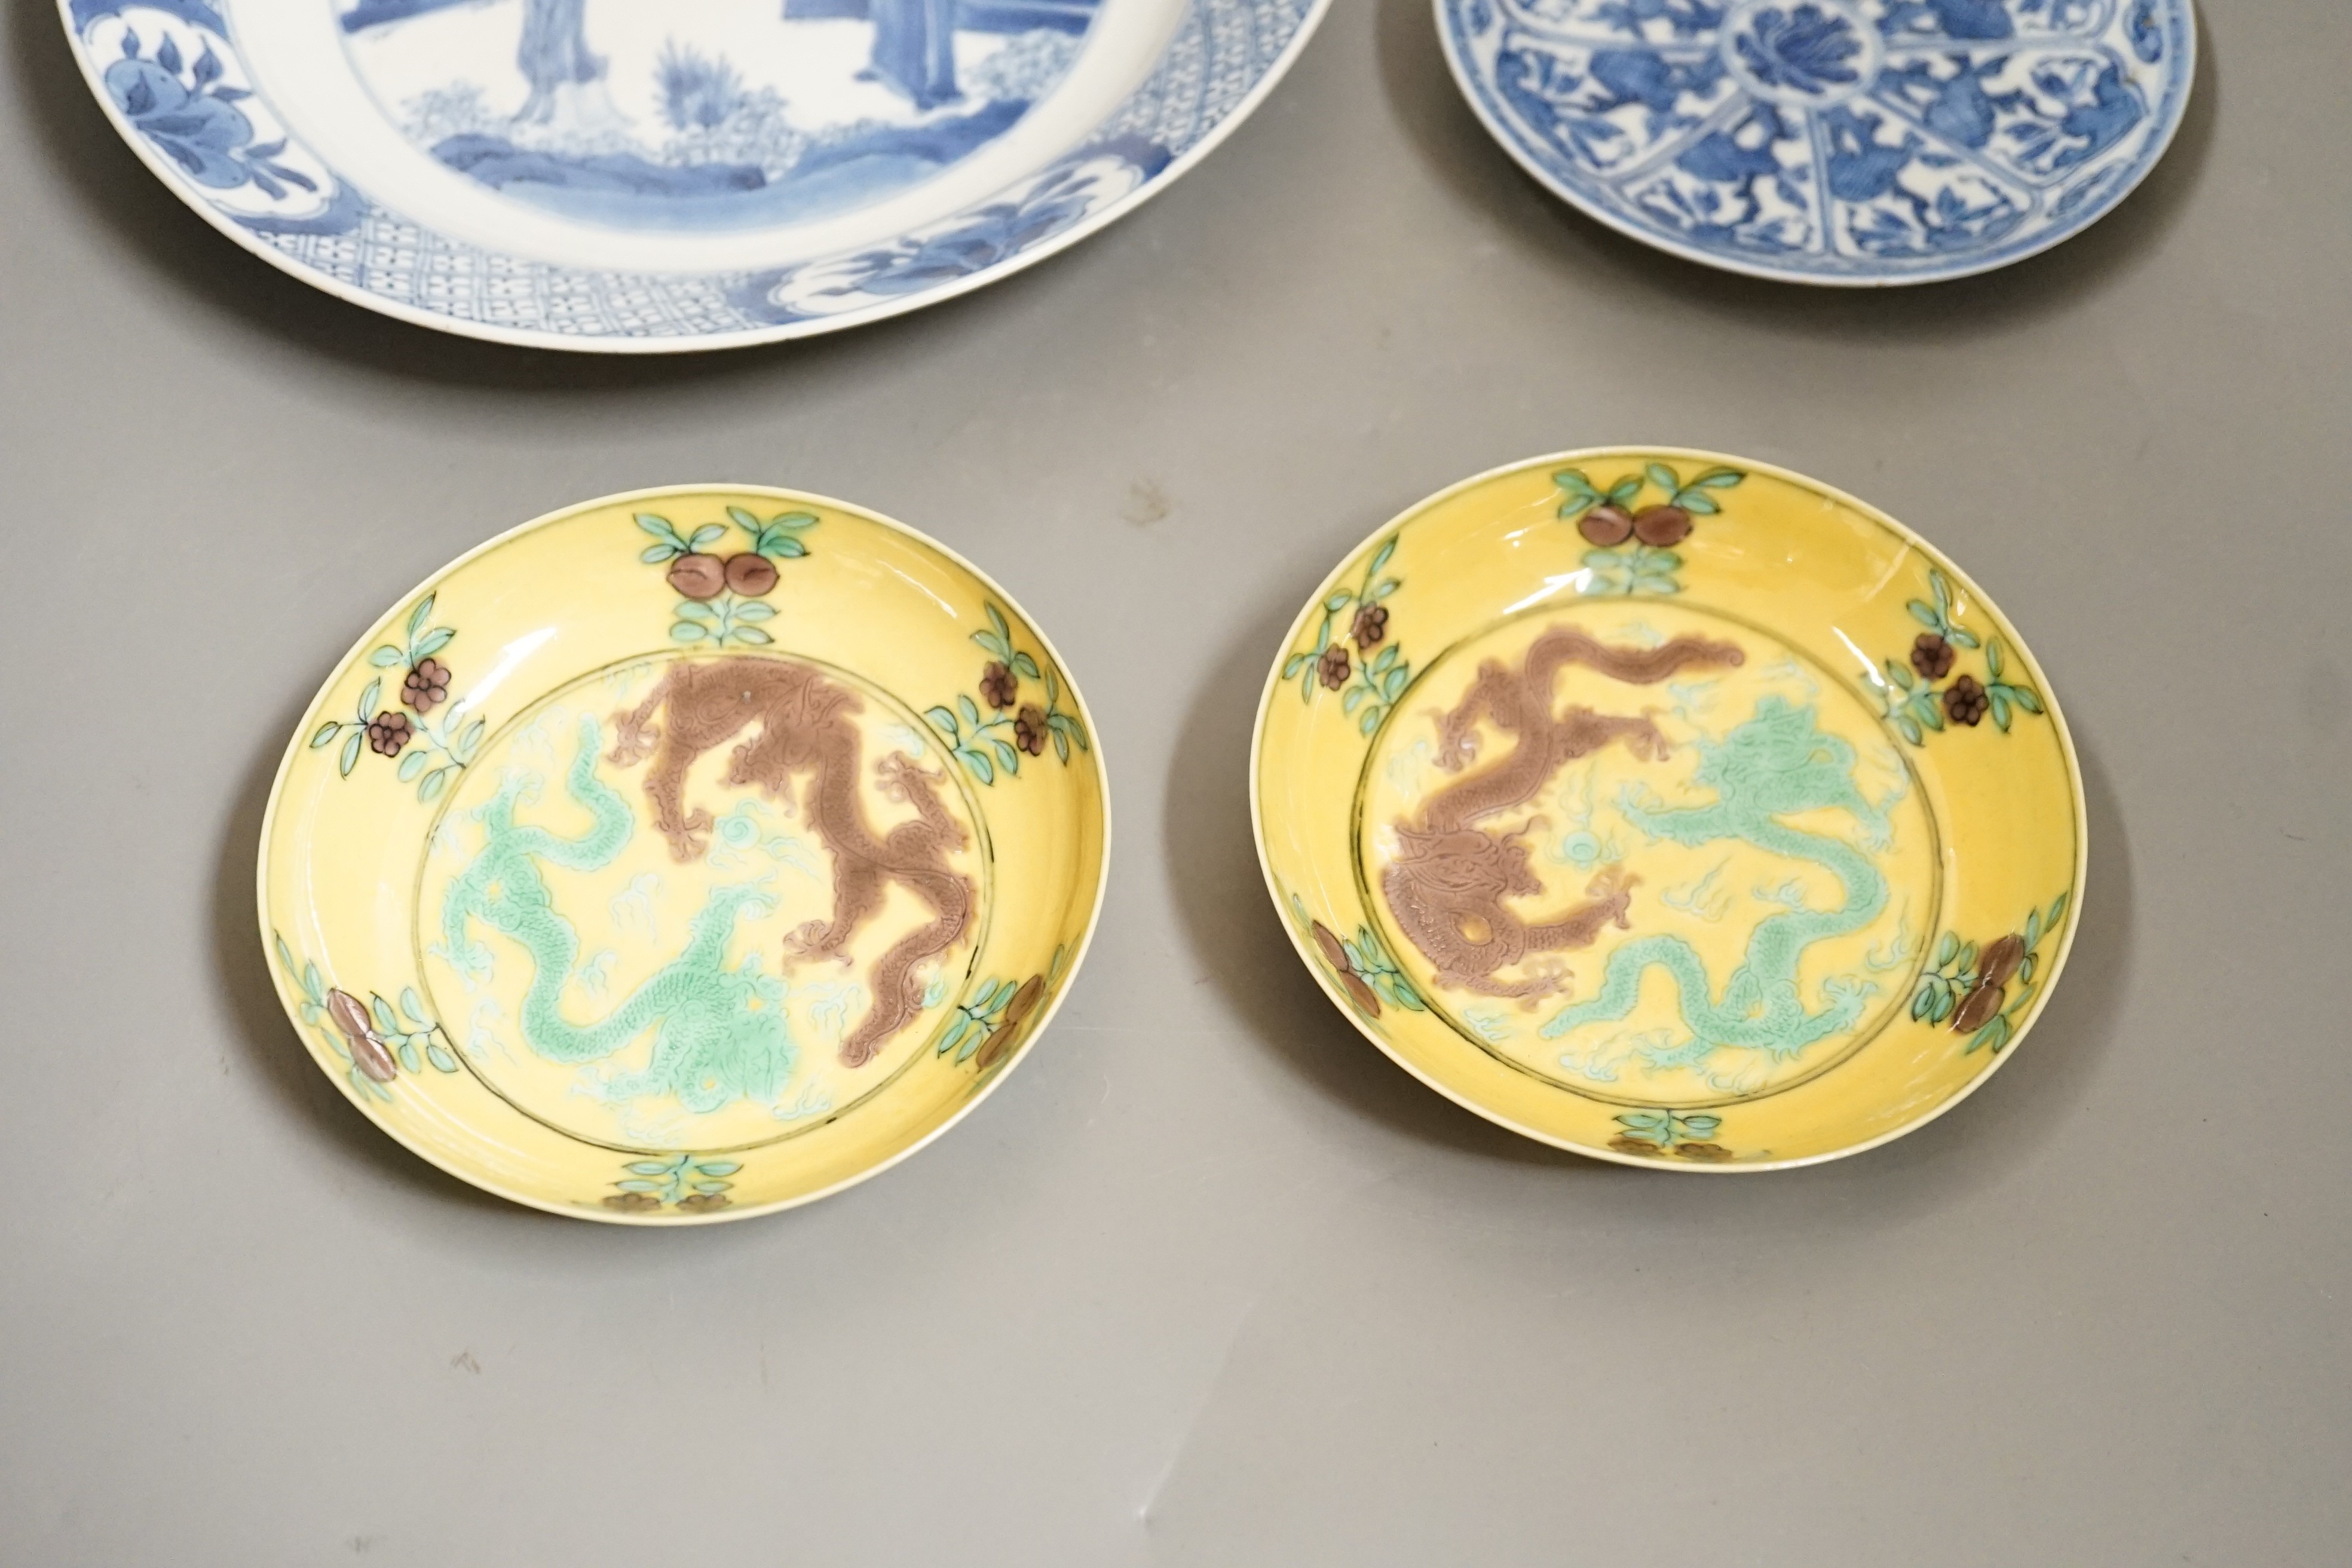 A pair of Chinese dragon dishes, a Kangxi blue and white plate, a Kangxi blue and white dish with chenghua mark